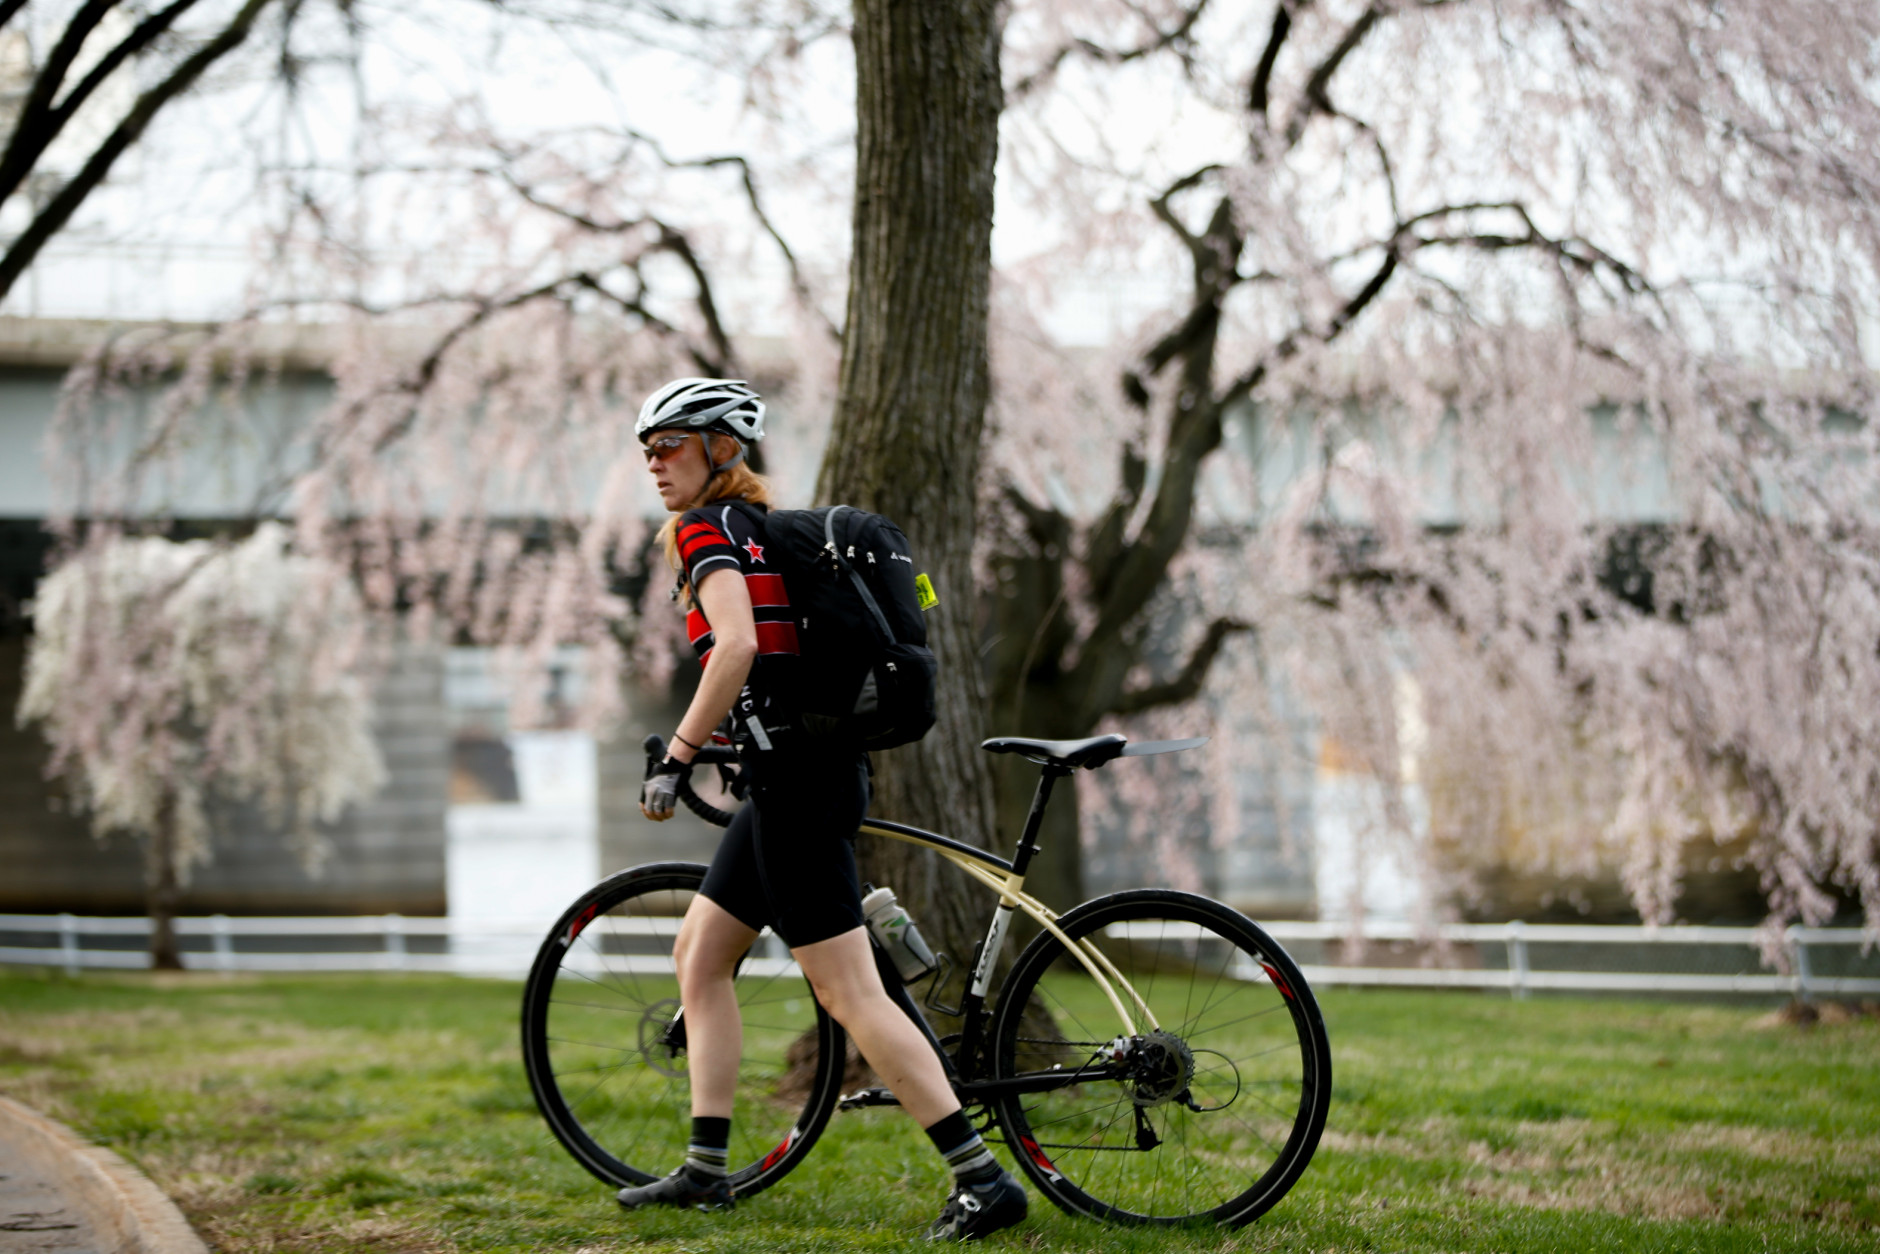 Cindy Janetzko of Falls Church, Va., walks her bicycle through cherry blossoms trees in Washington, Tuesday, April 7, 2015. (AP Photo/Andrew Harnik)